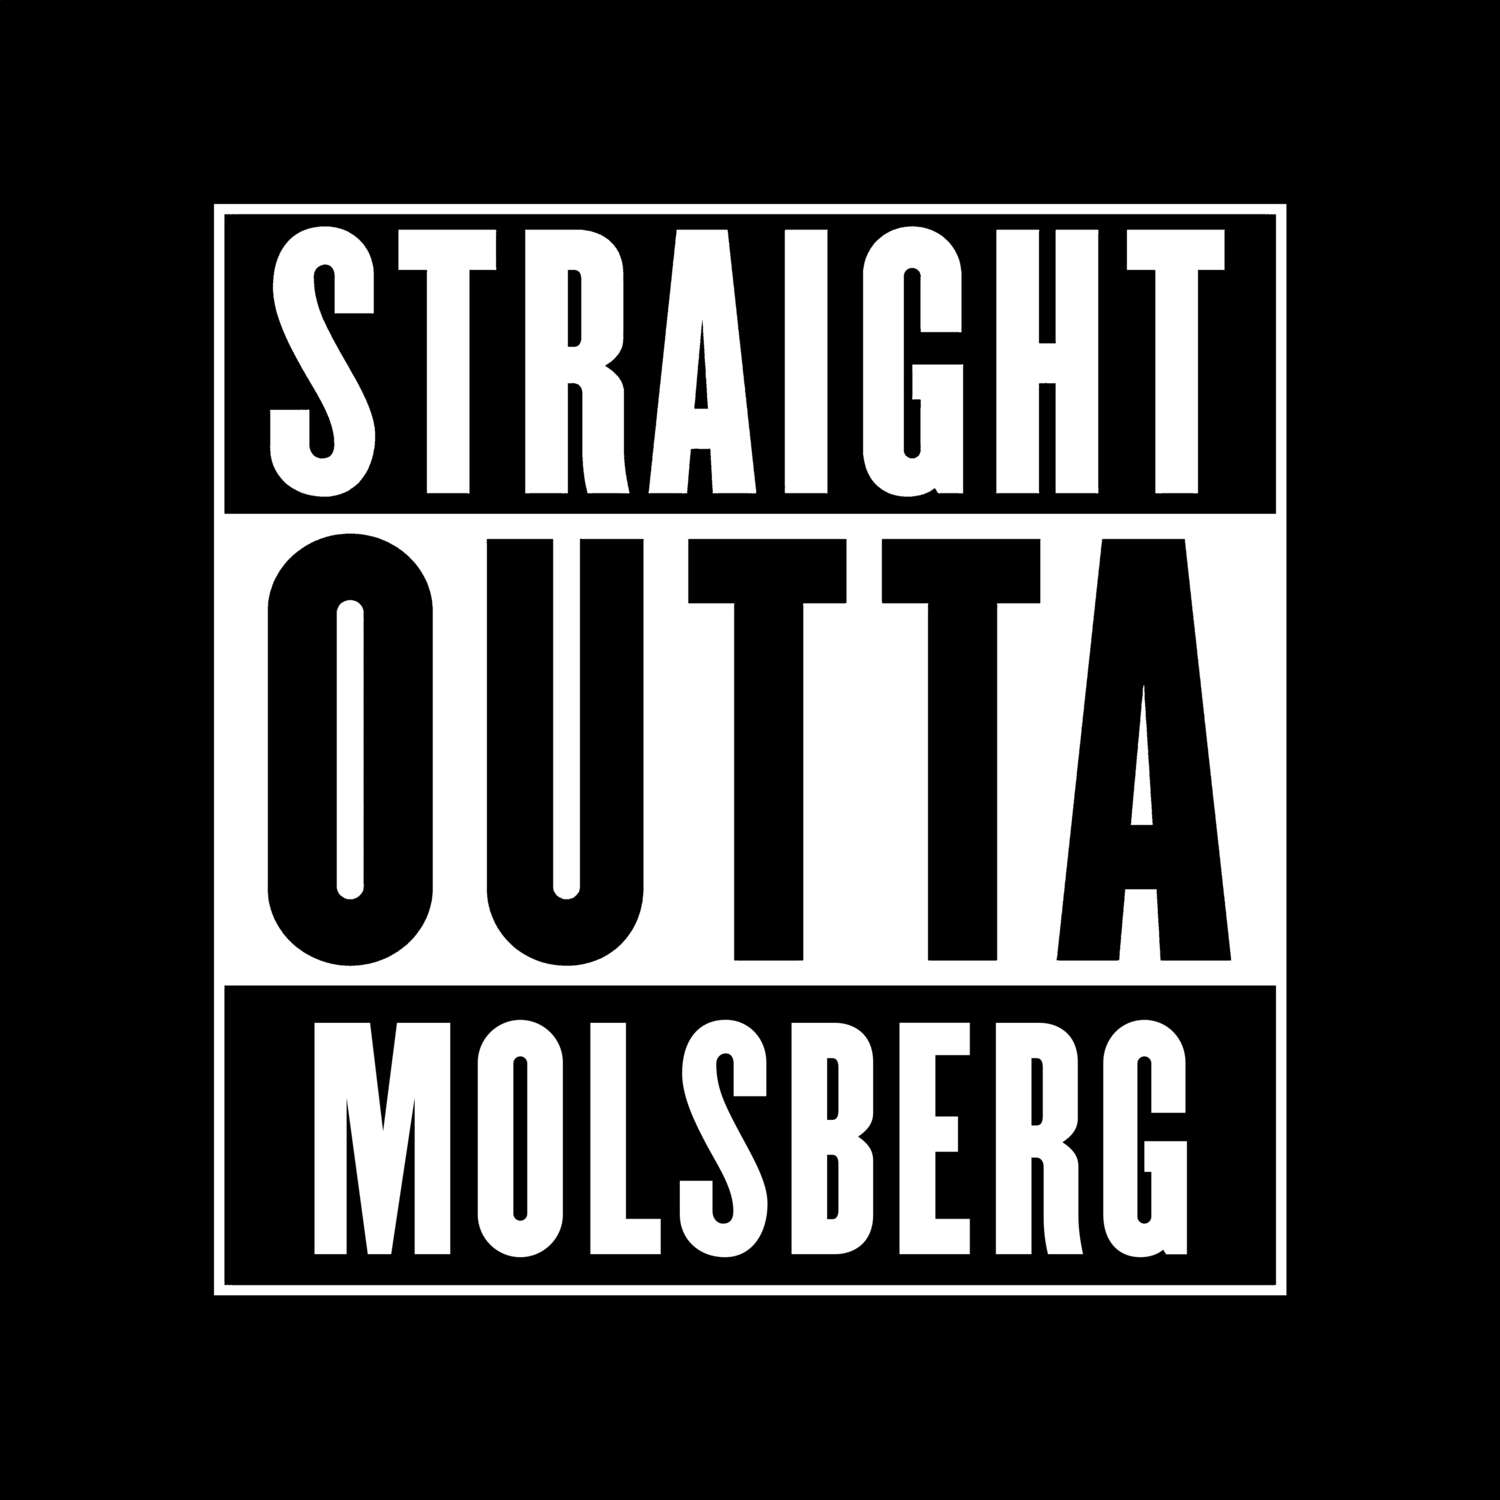 Molsberg T-Shirt »Straight Outta«